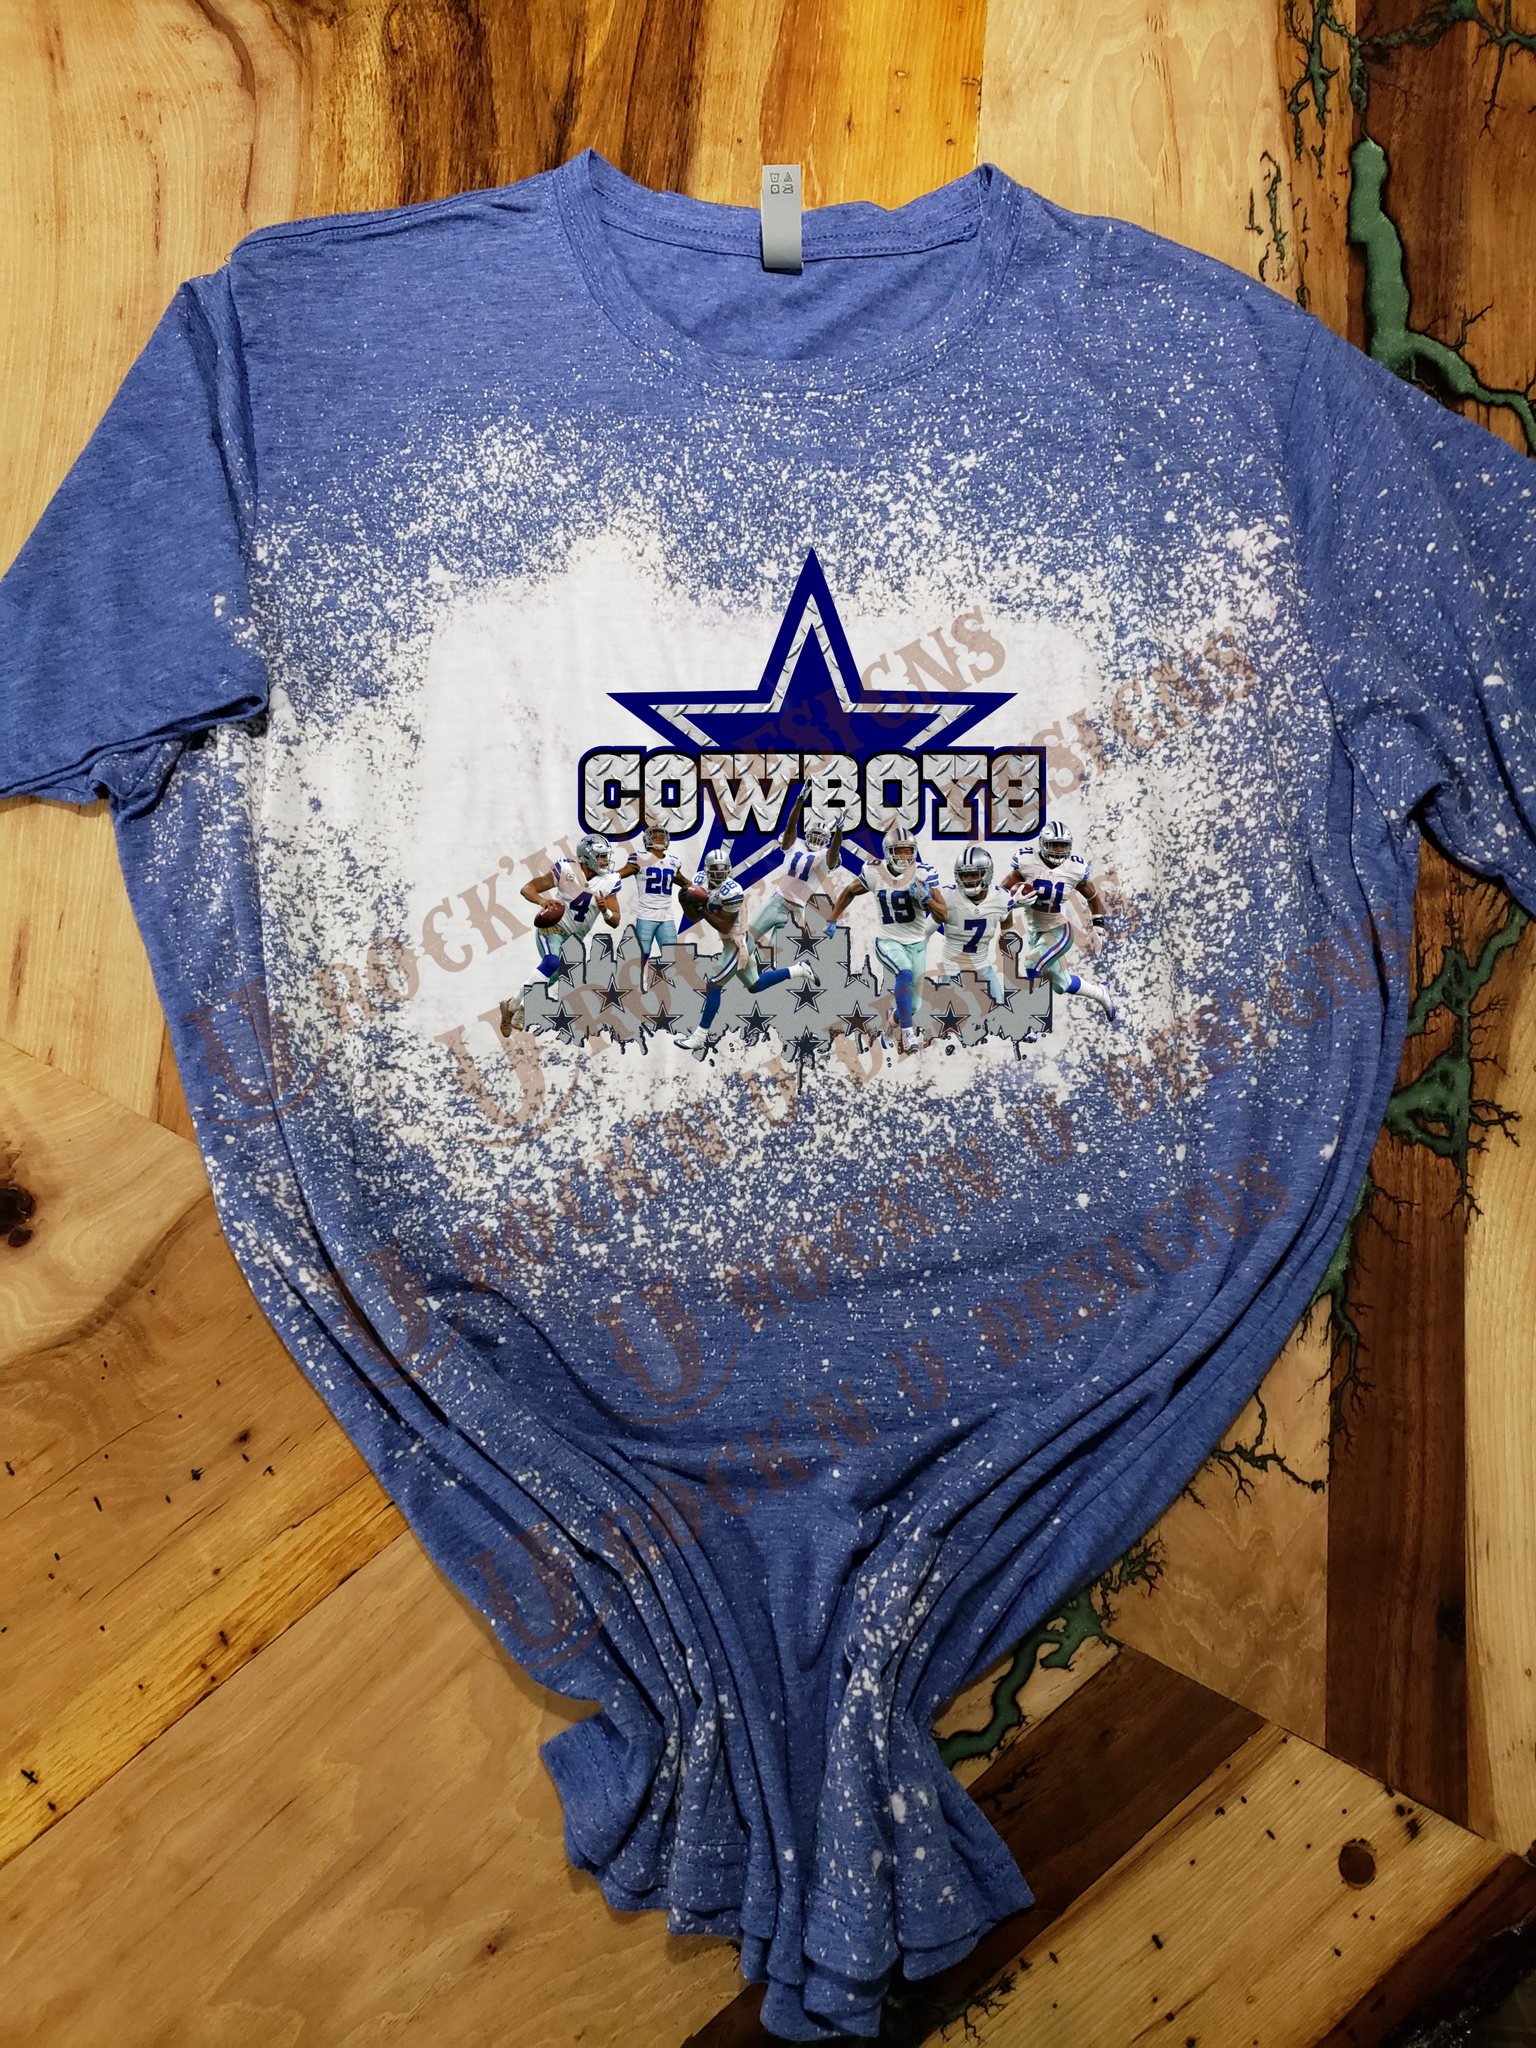 blue dallas cowboys shirt